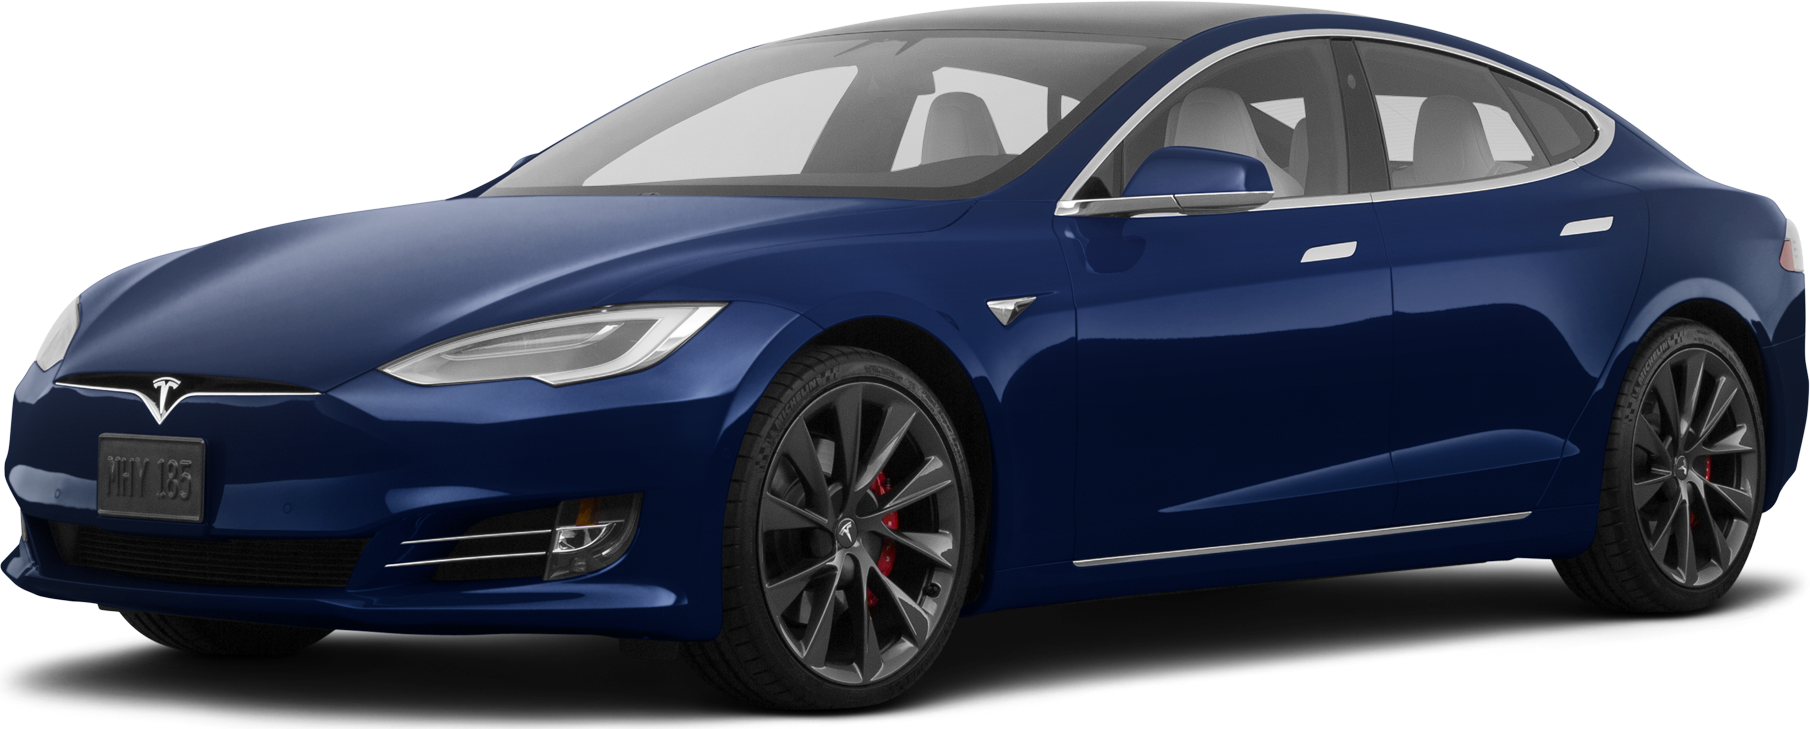 2019 Tesla Model S Blue Albumccars Cars Images Collection